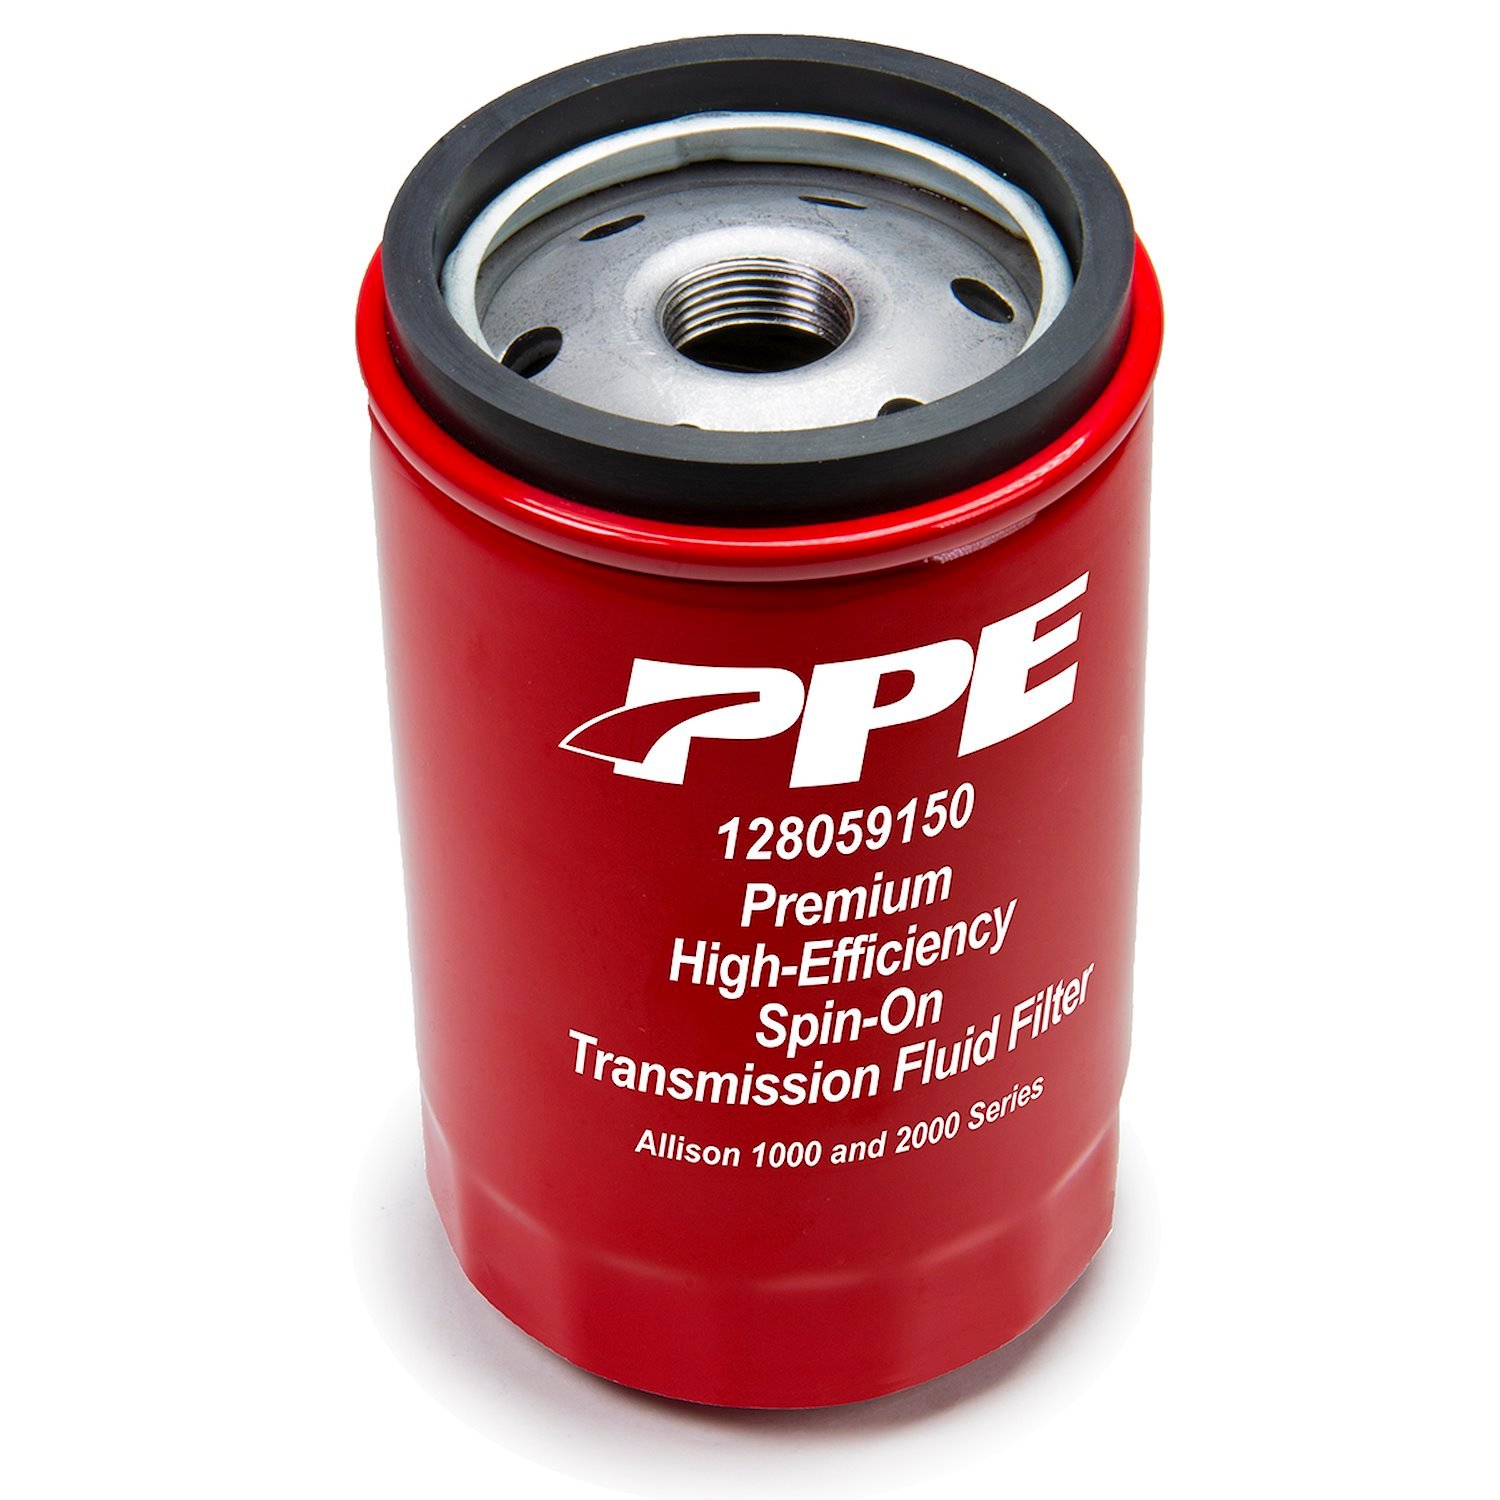 128059150 Premium High-Efficiency Spin-On Transmission Fluid Filter